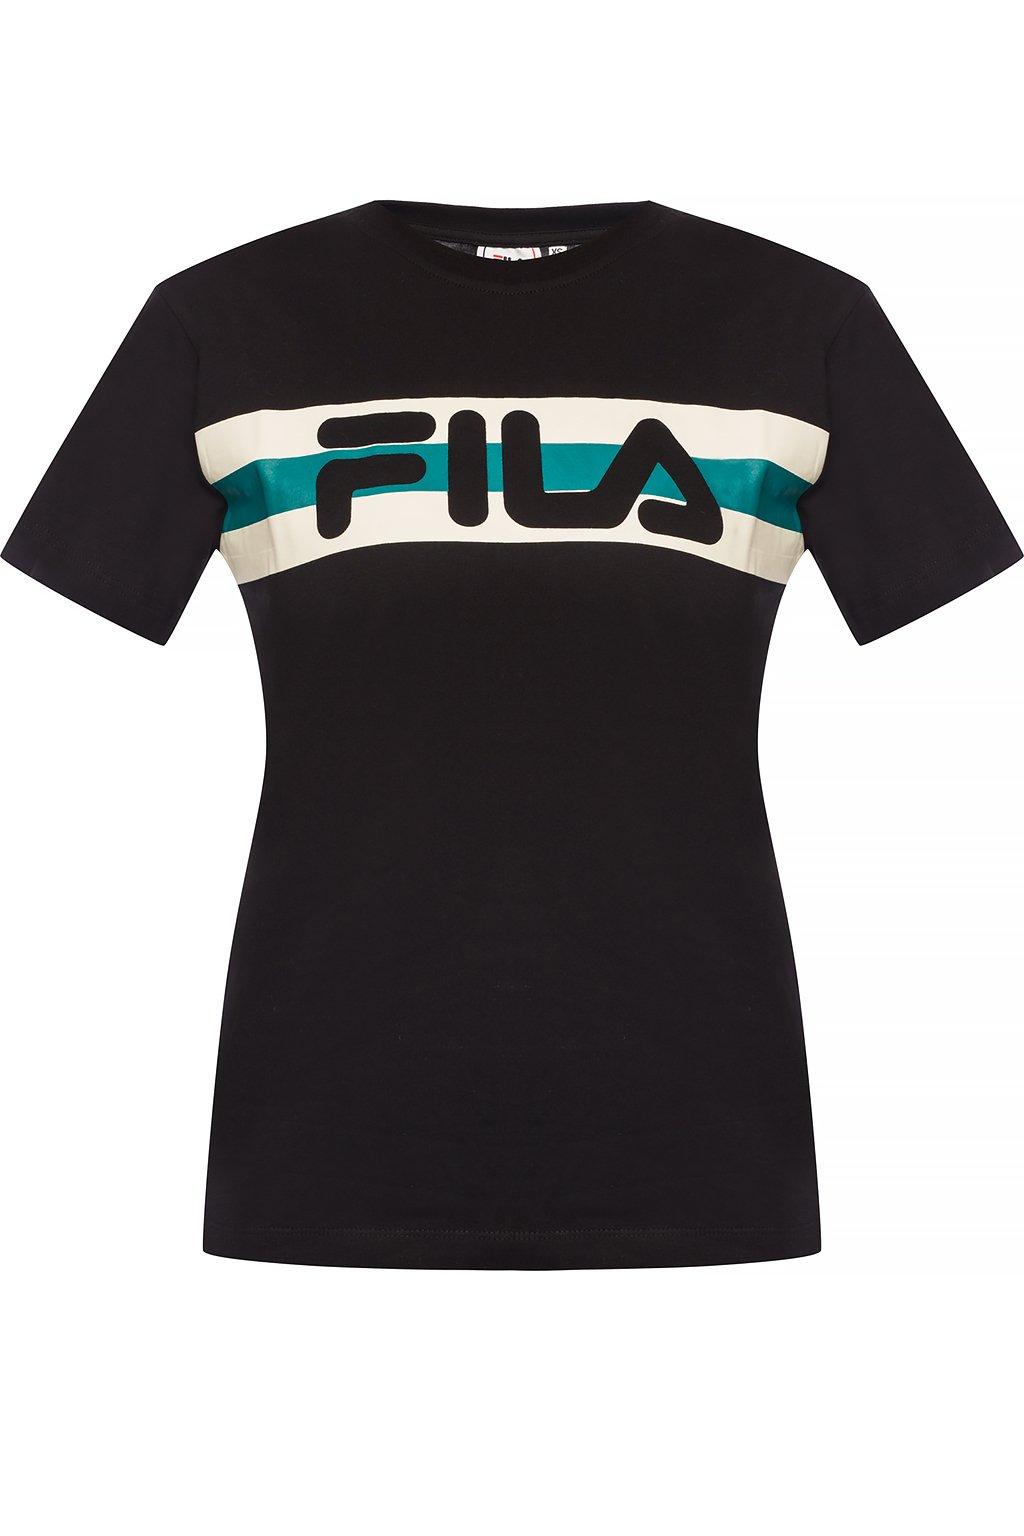 Fila Cotton Logo Stripe T-shirt in Black - Lyst